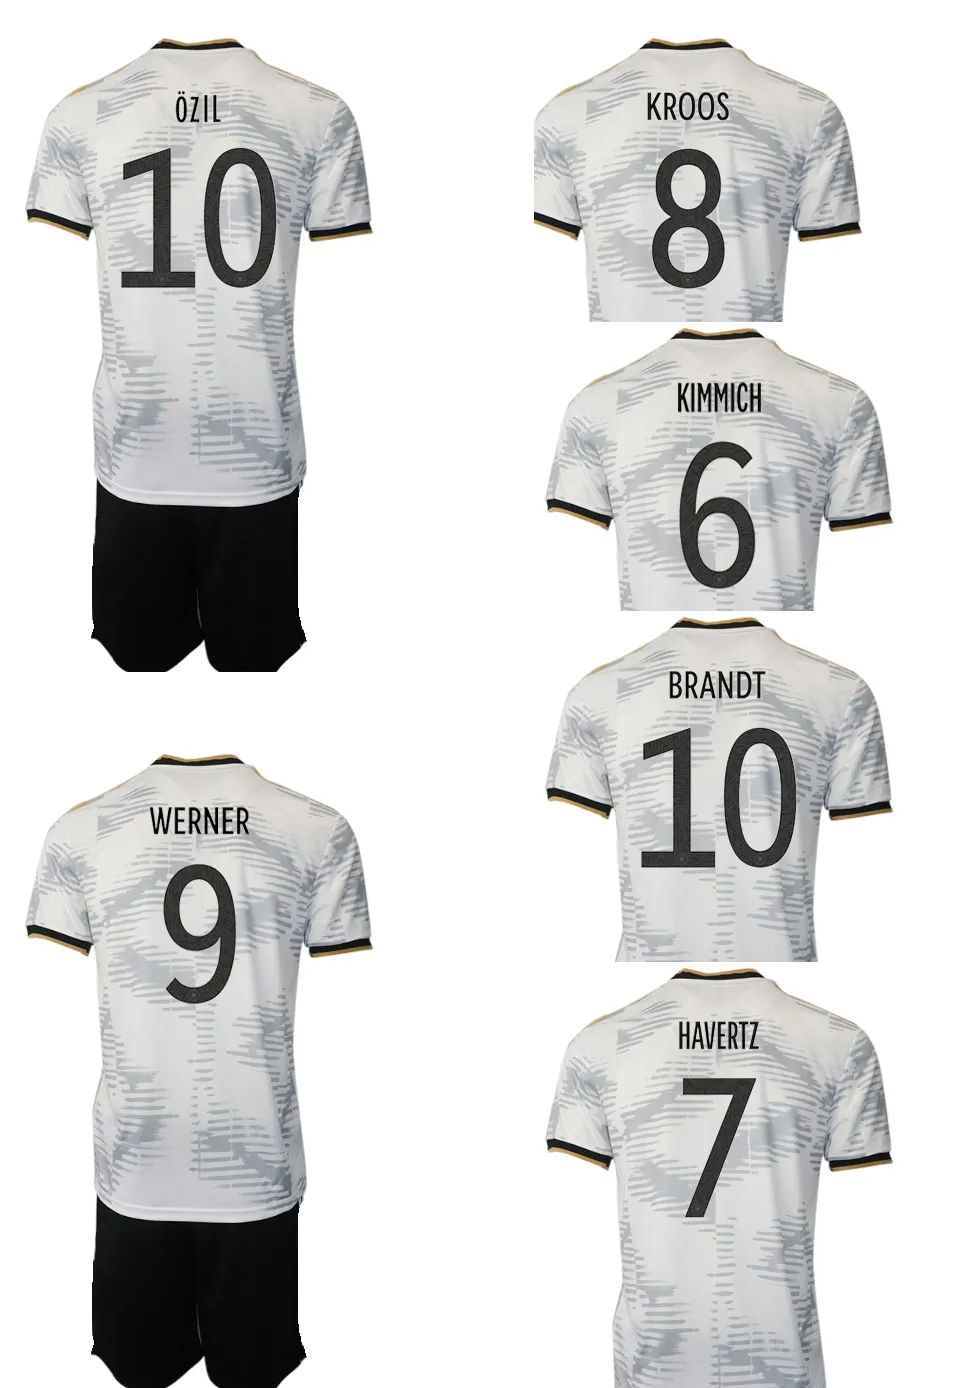 22-23 Jerseys de futebol personalizados sets com shorts yakuda botas locais lojas on-line dropshipp aceita 10 Brandt 9 werner 20 gnaery 5 tah 11 reus 8 kroos custom